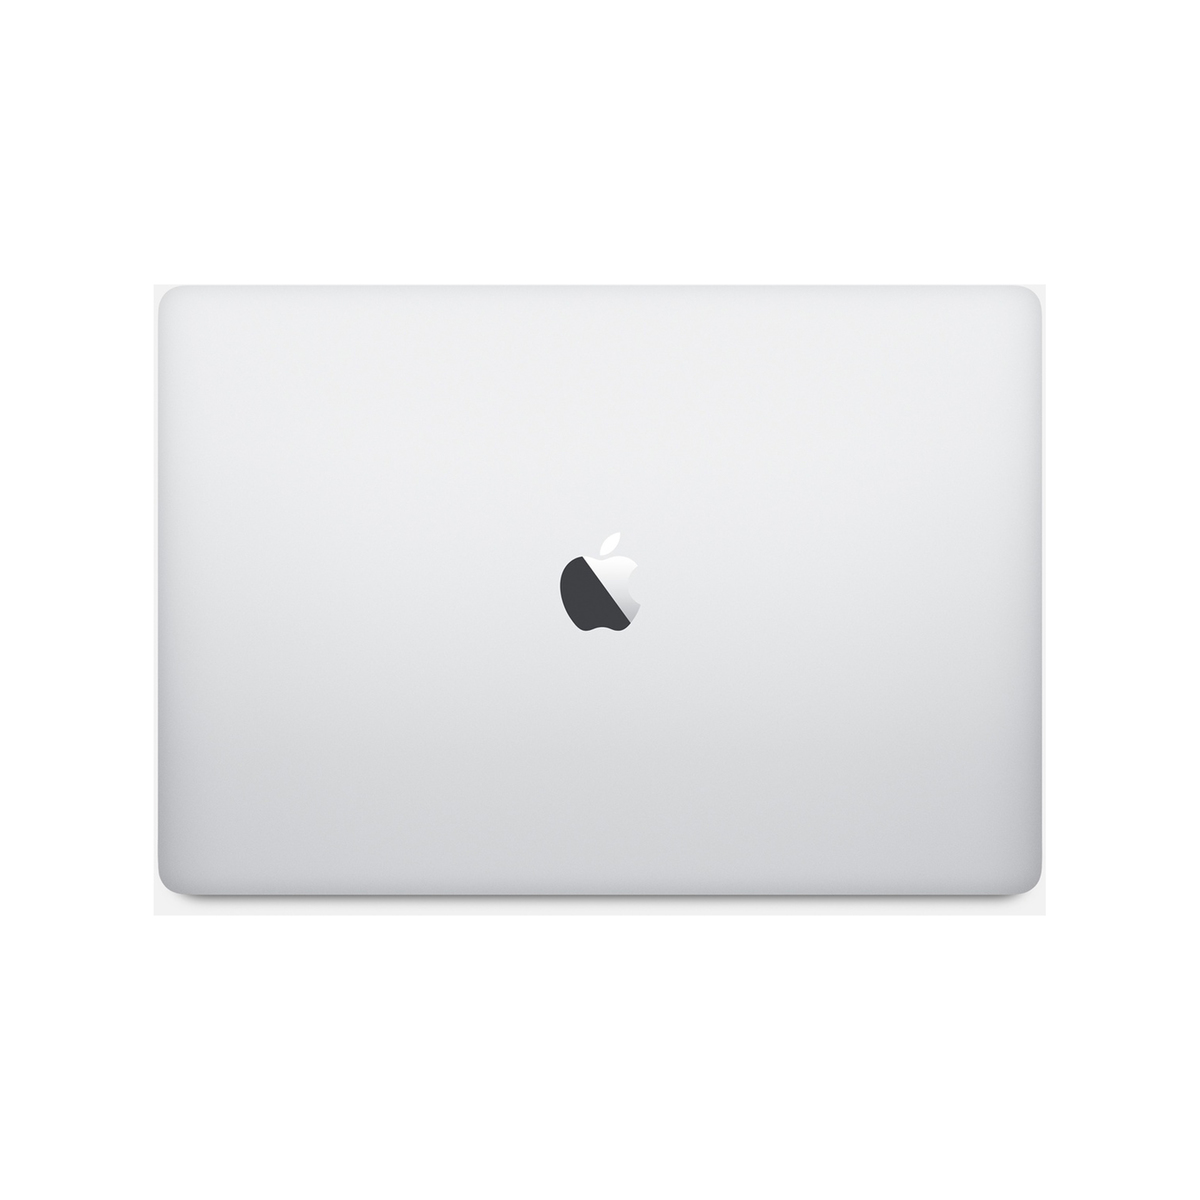 MacBook Pro Touch Bar With 13.3-Inch Retina Display, Core i7 Processor/8GB RAM/128GB SSD/Silver(MUHQ2BA)